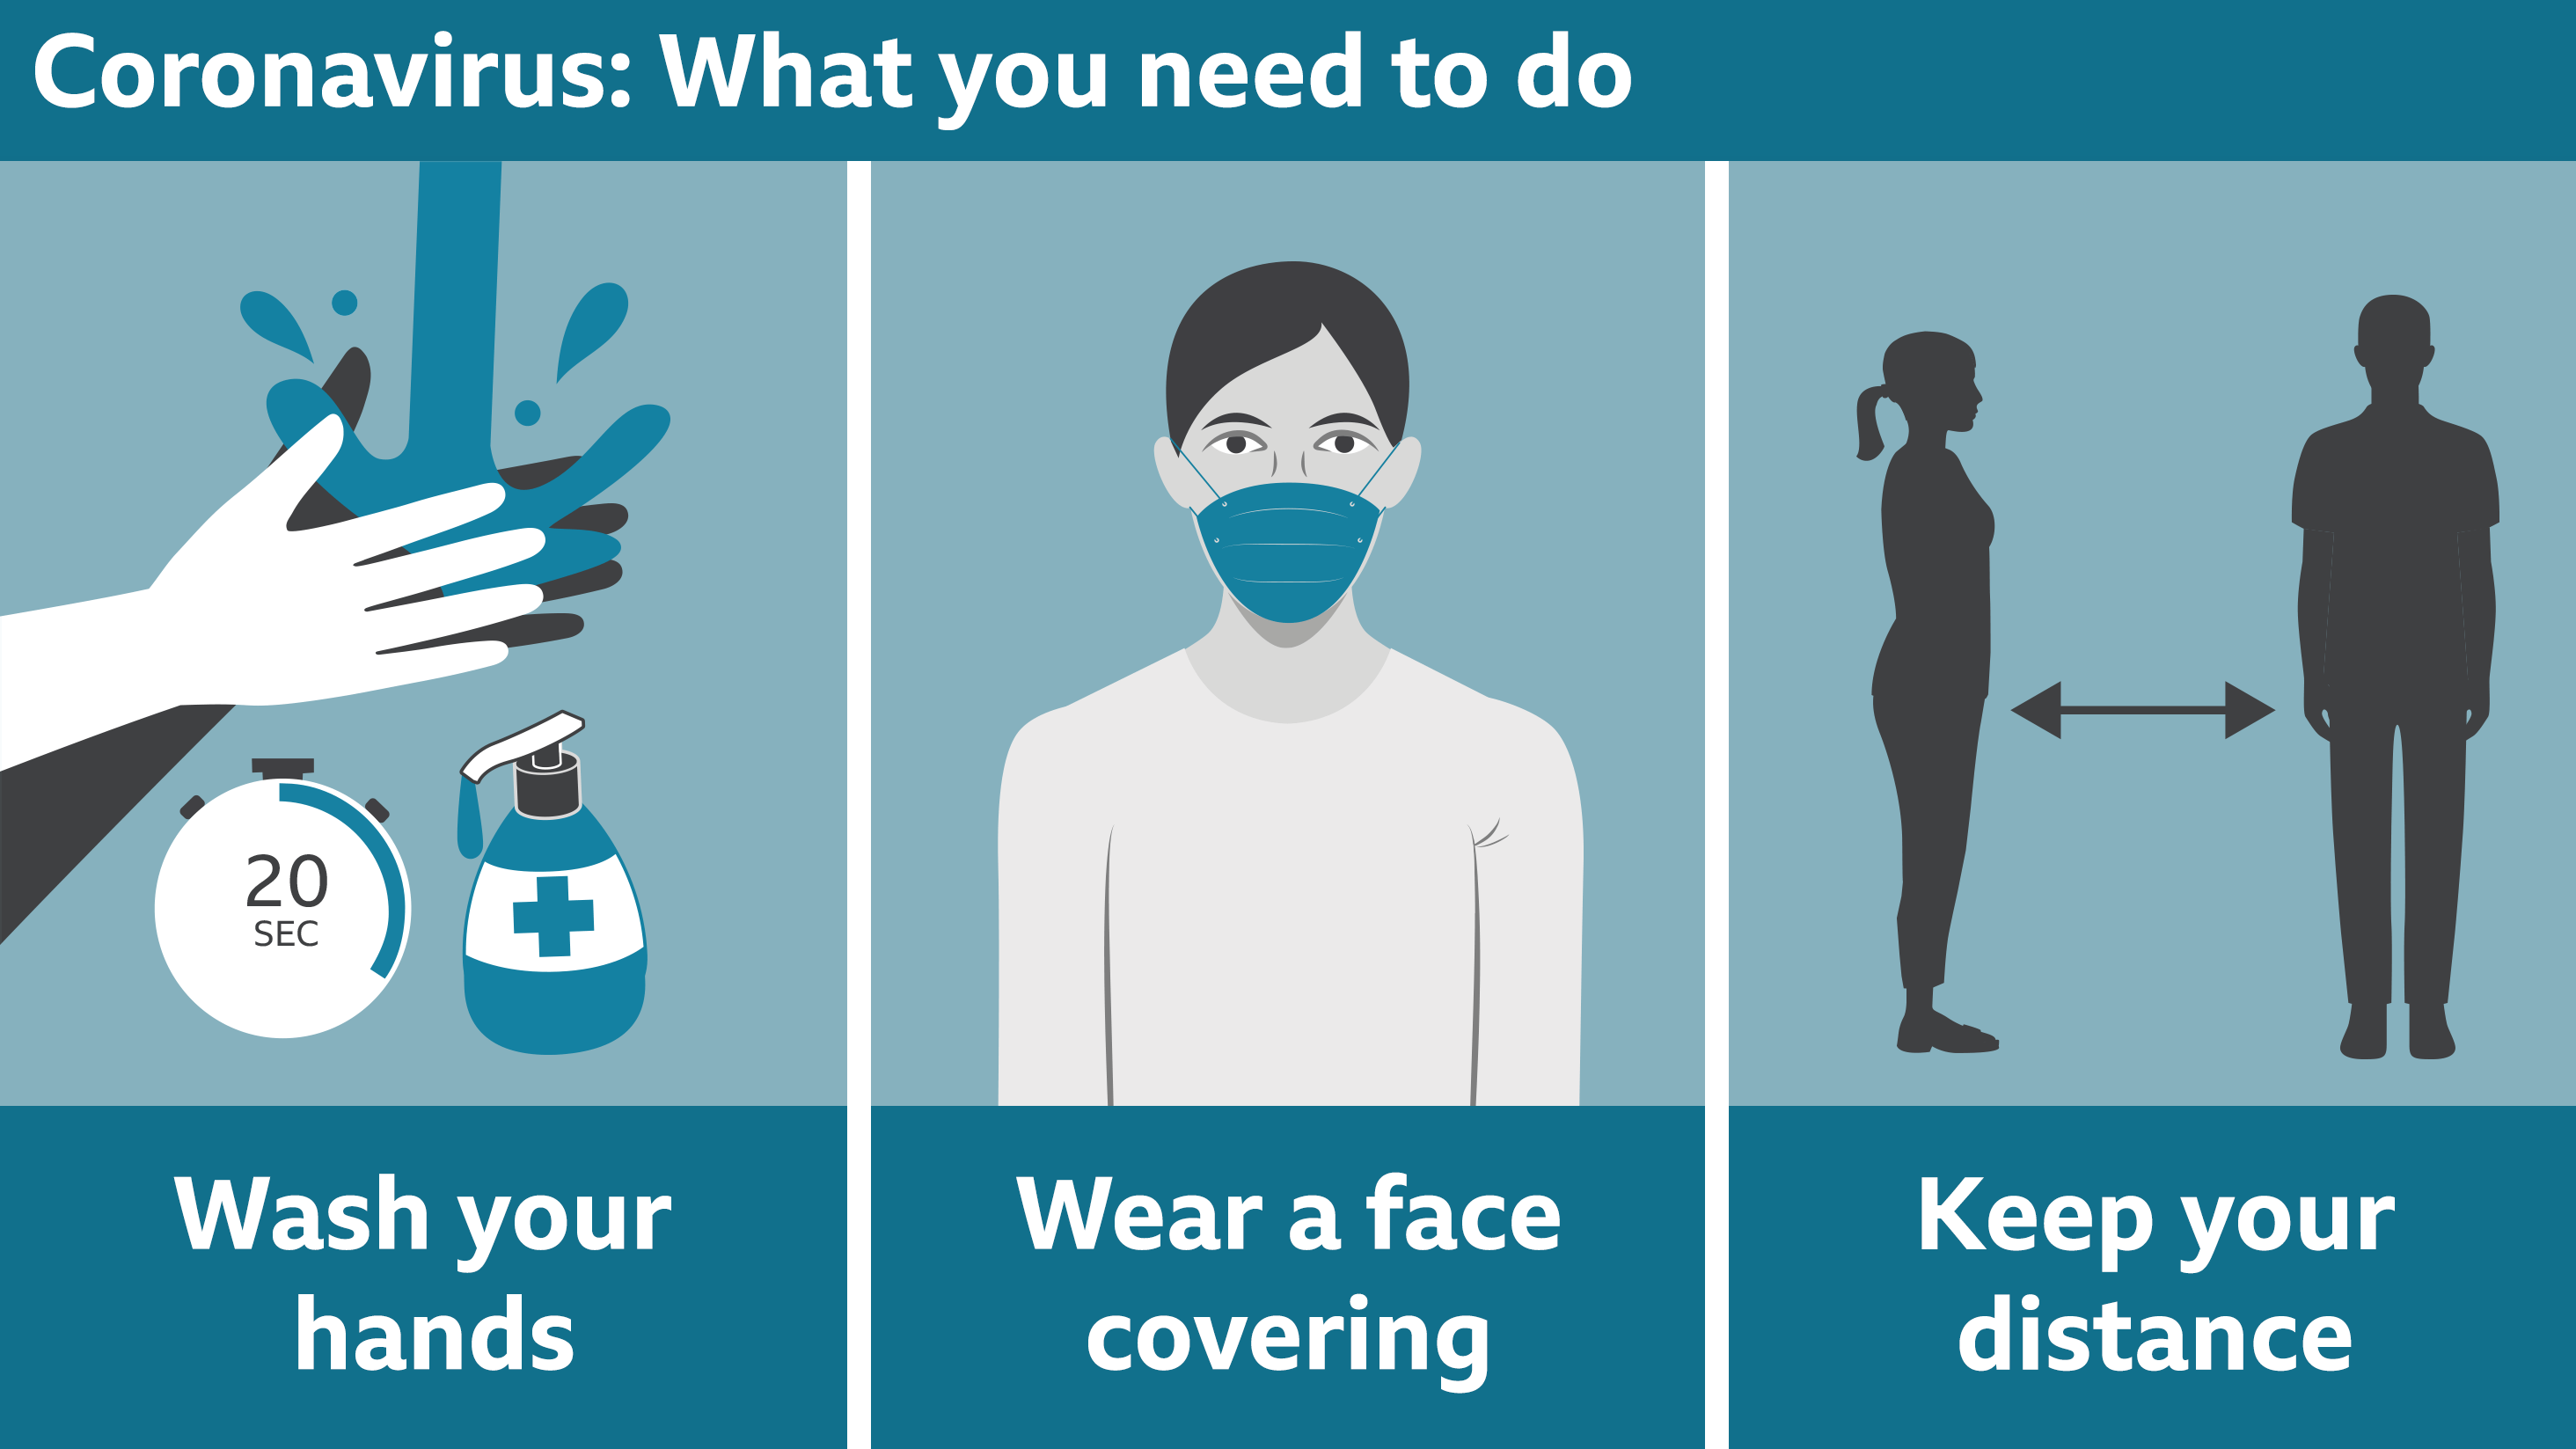 Coronavirus: Simple guide to staying safe - BBC News